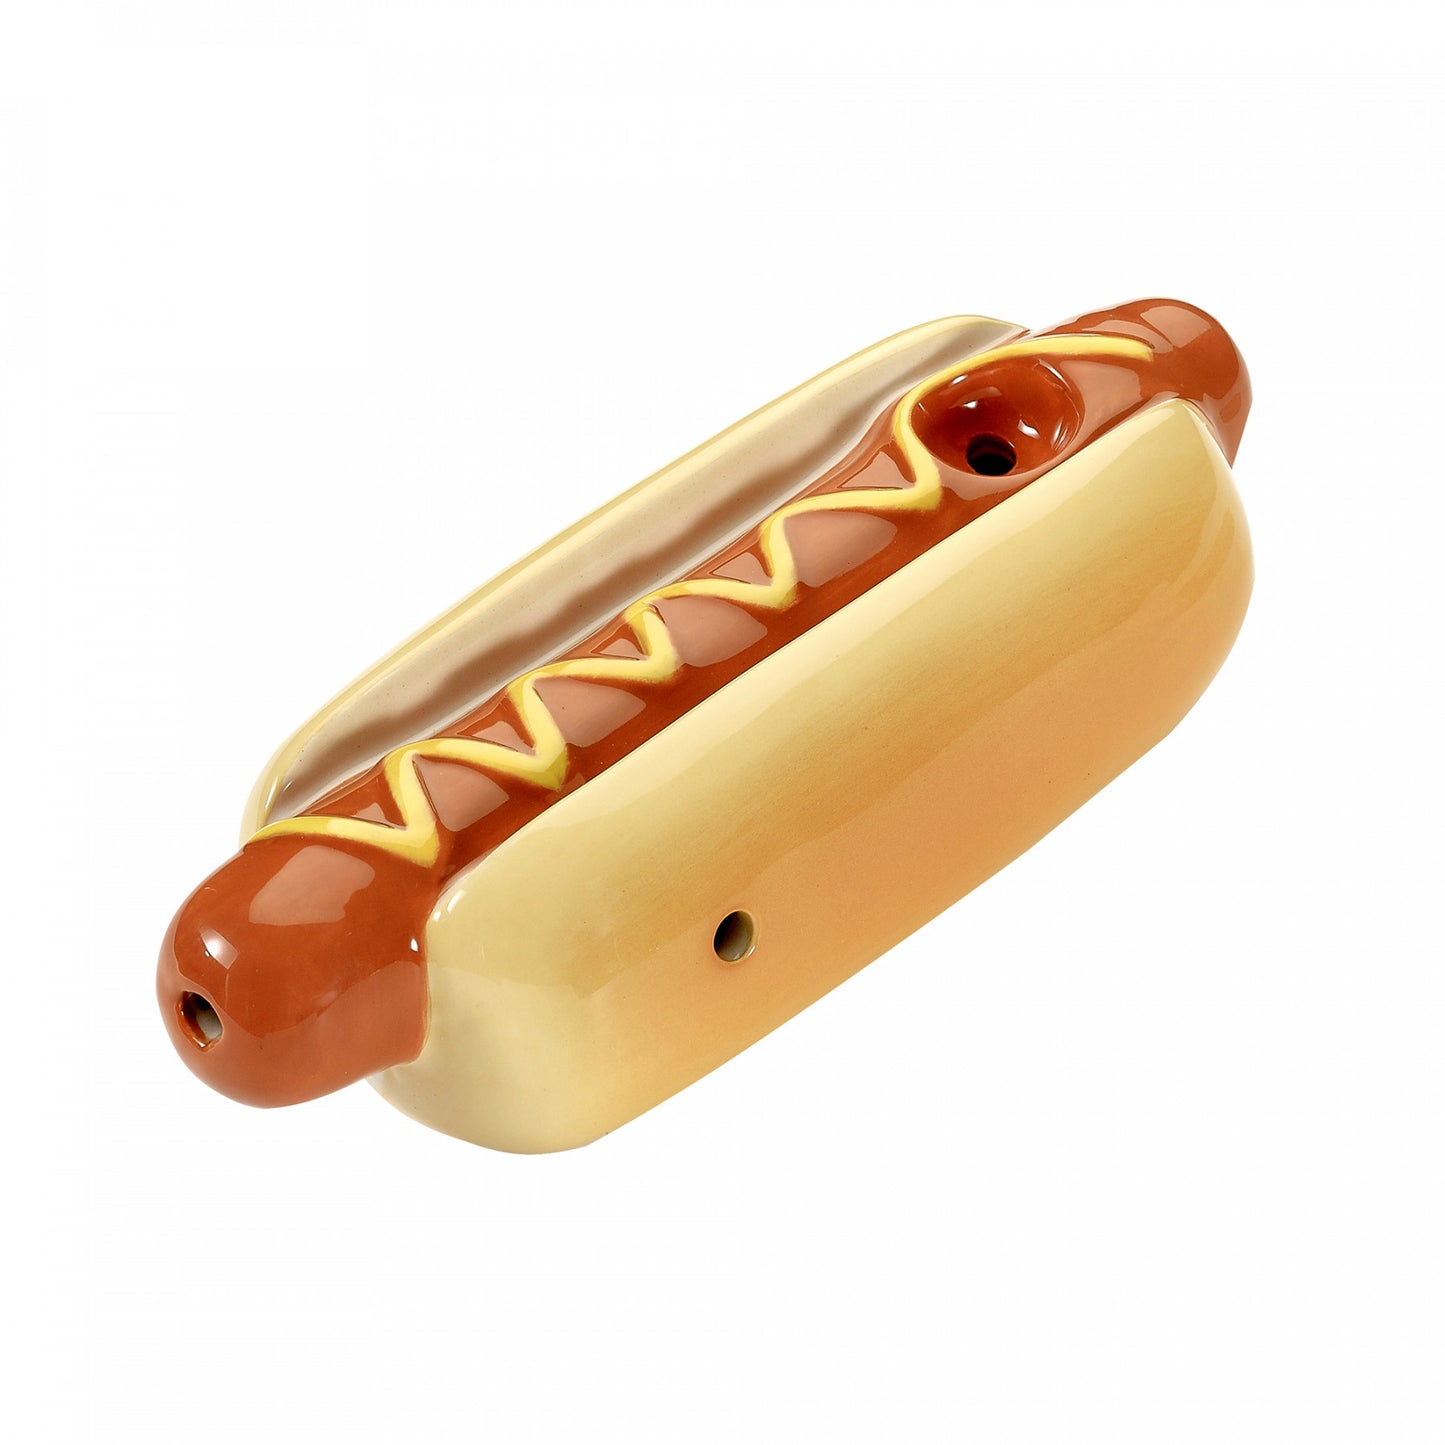 Ceramic Hot Dog Pipe